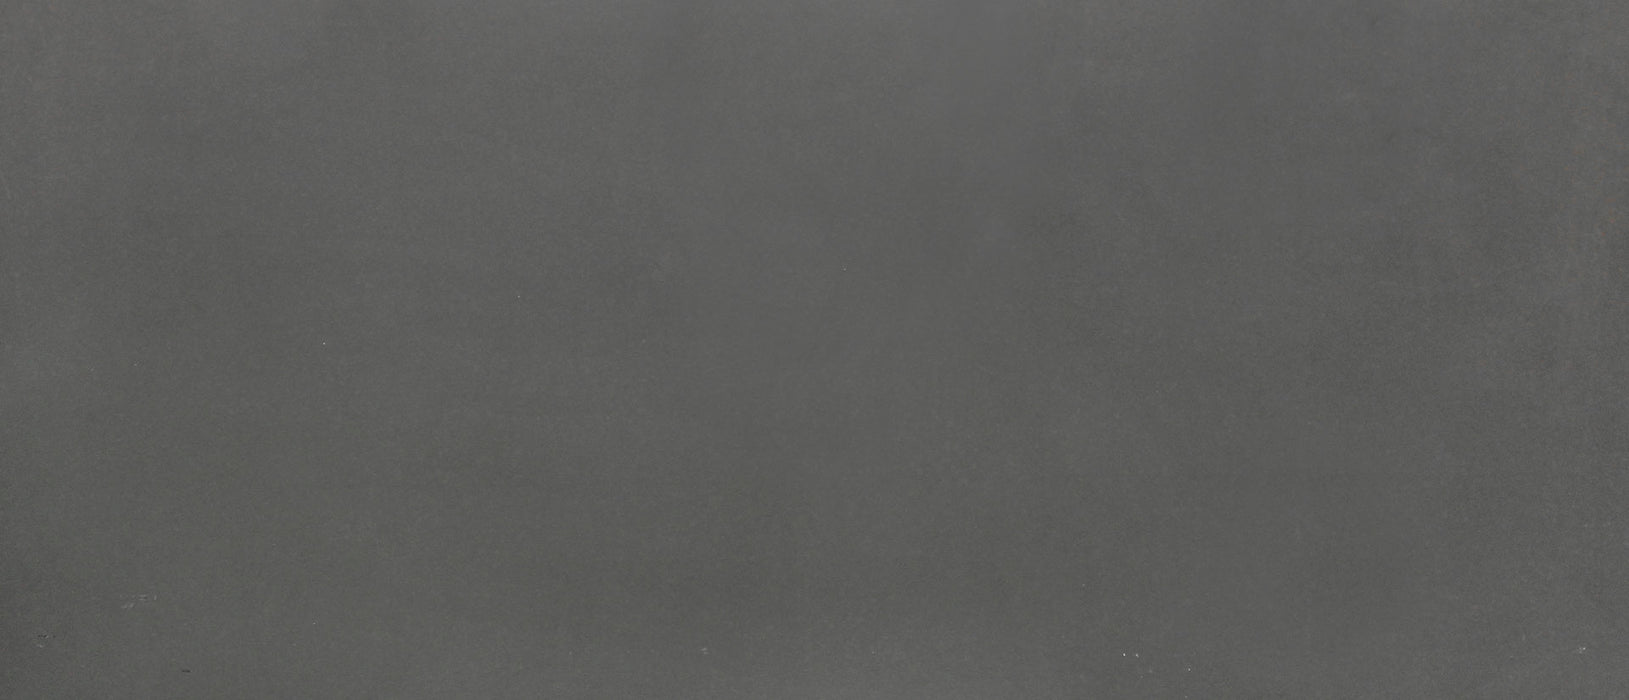 Shadow gray quartz countertop slab